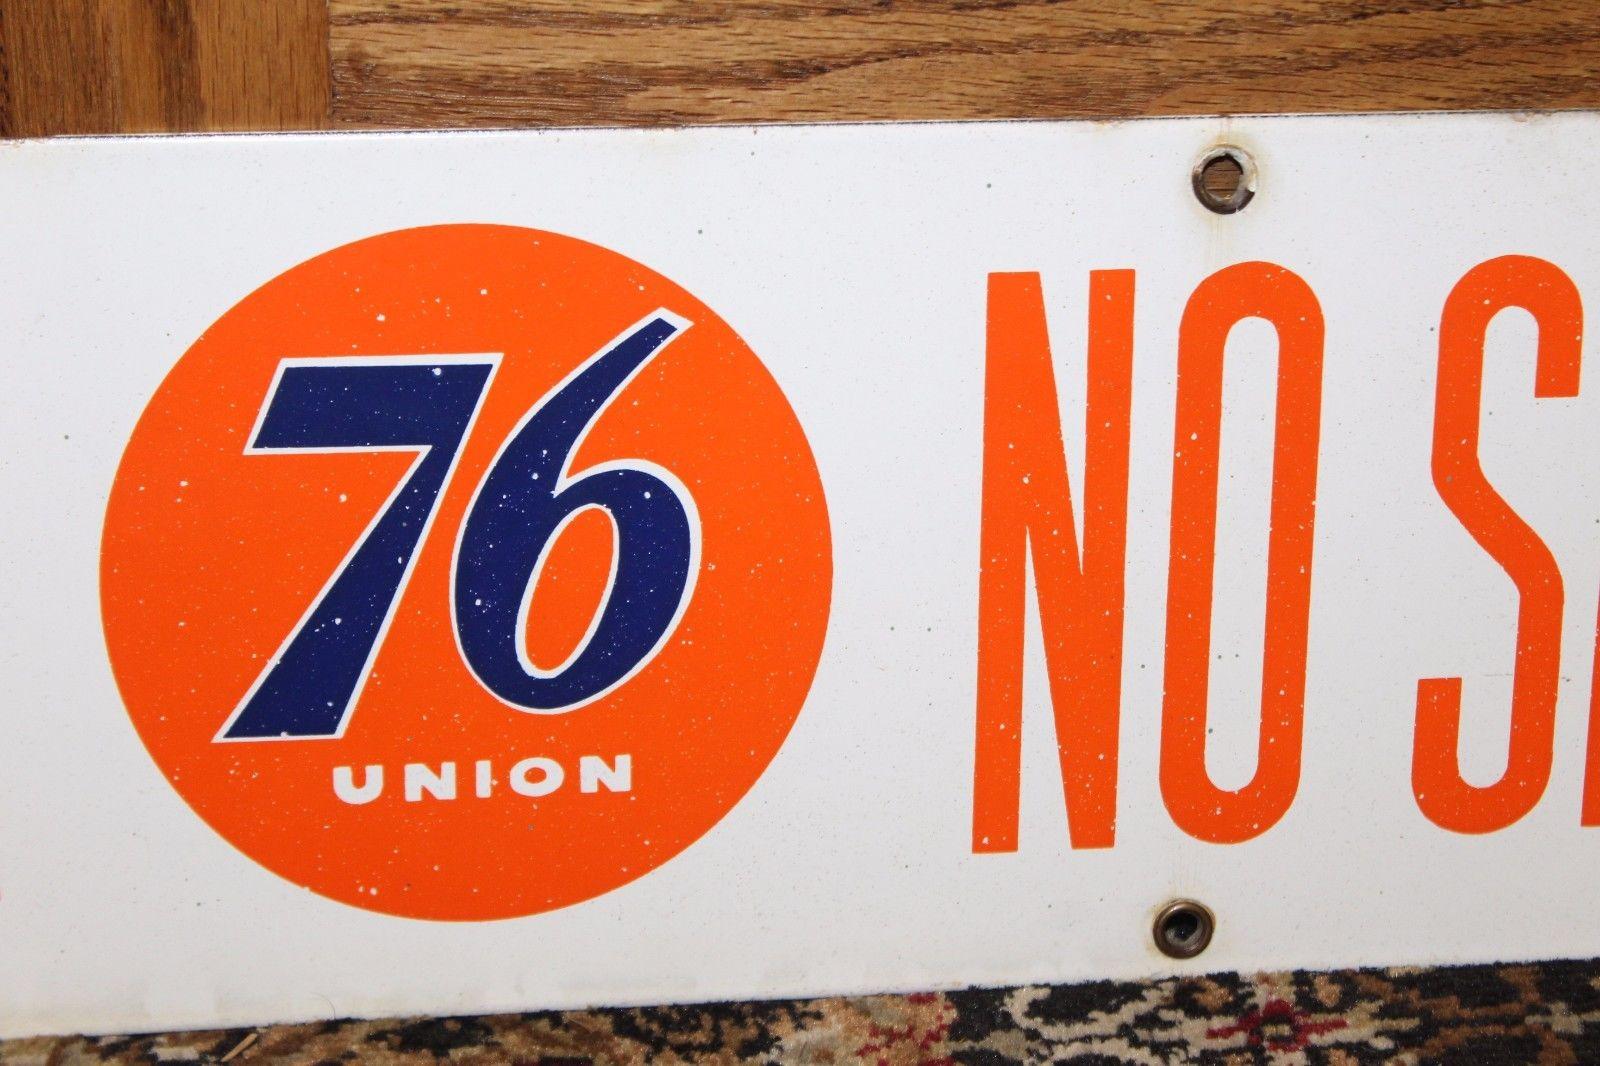 American 1950s Union 76 